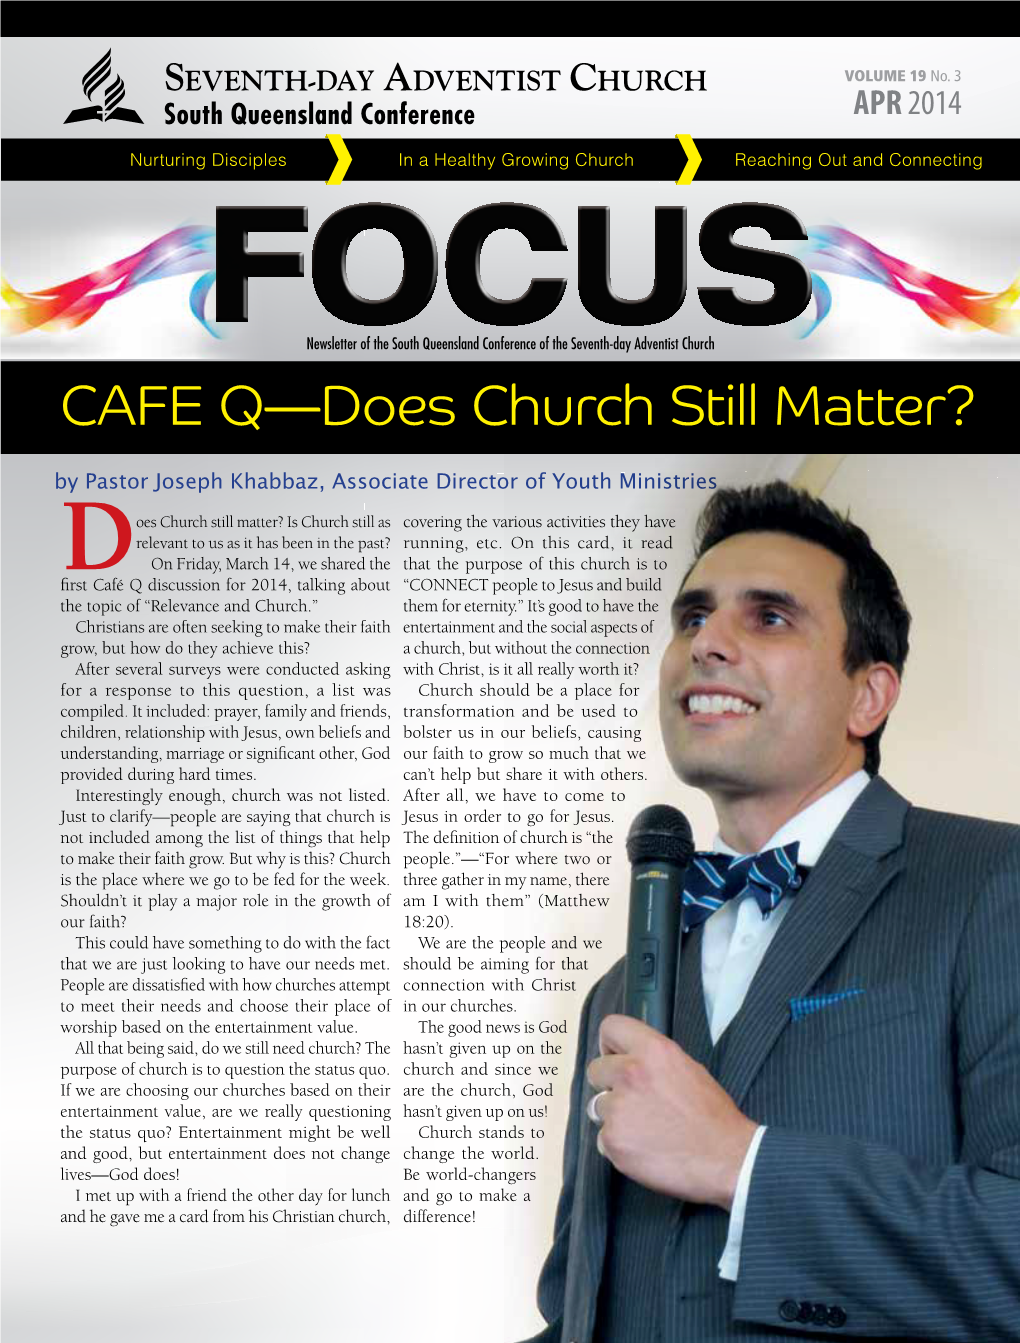 CAFE Q—Does Church Still Matter? by Pastor Joseph Khabbaz, Associate Director of Youth Ministries